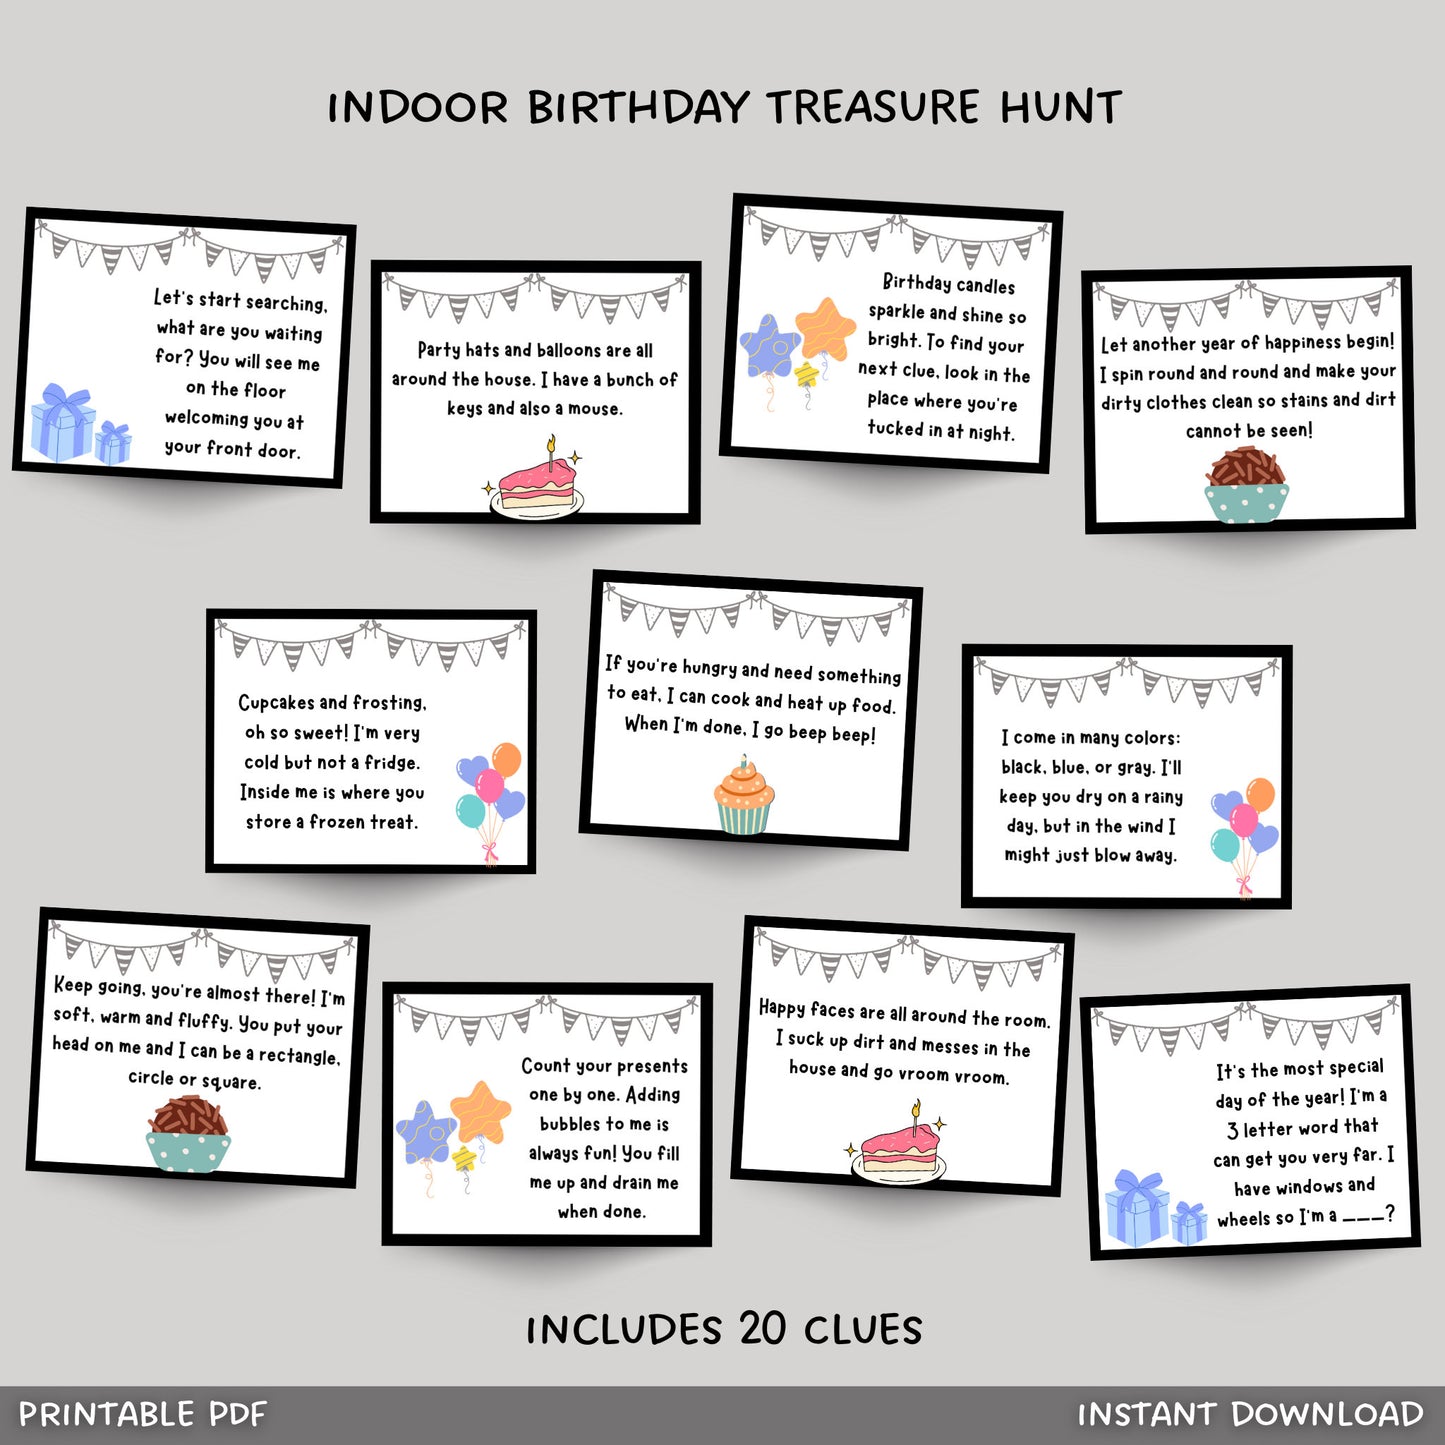 Indoor Birthday Treasure Hunt For Kids, Birthday Scavenger Hunt Clues, Birthday Printable Games, Indoor Birthday Games, Instant Download PDF